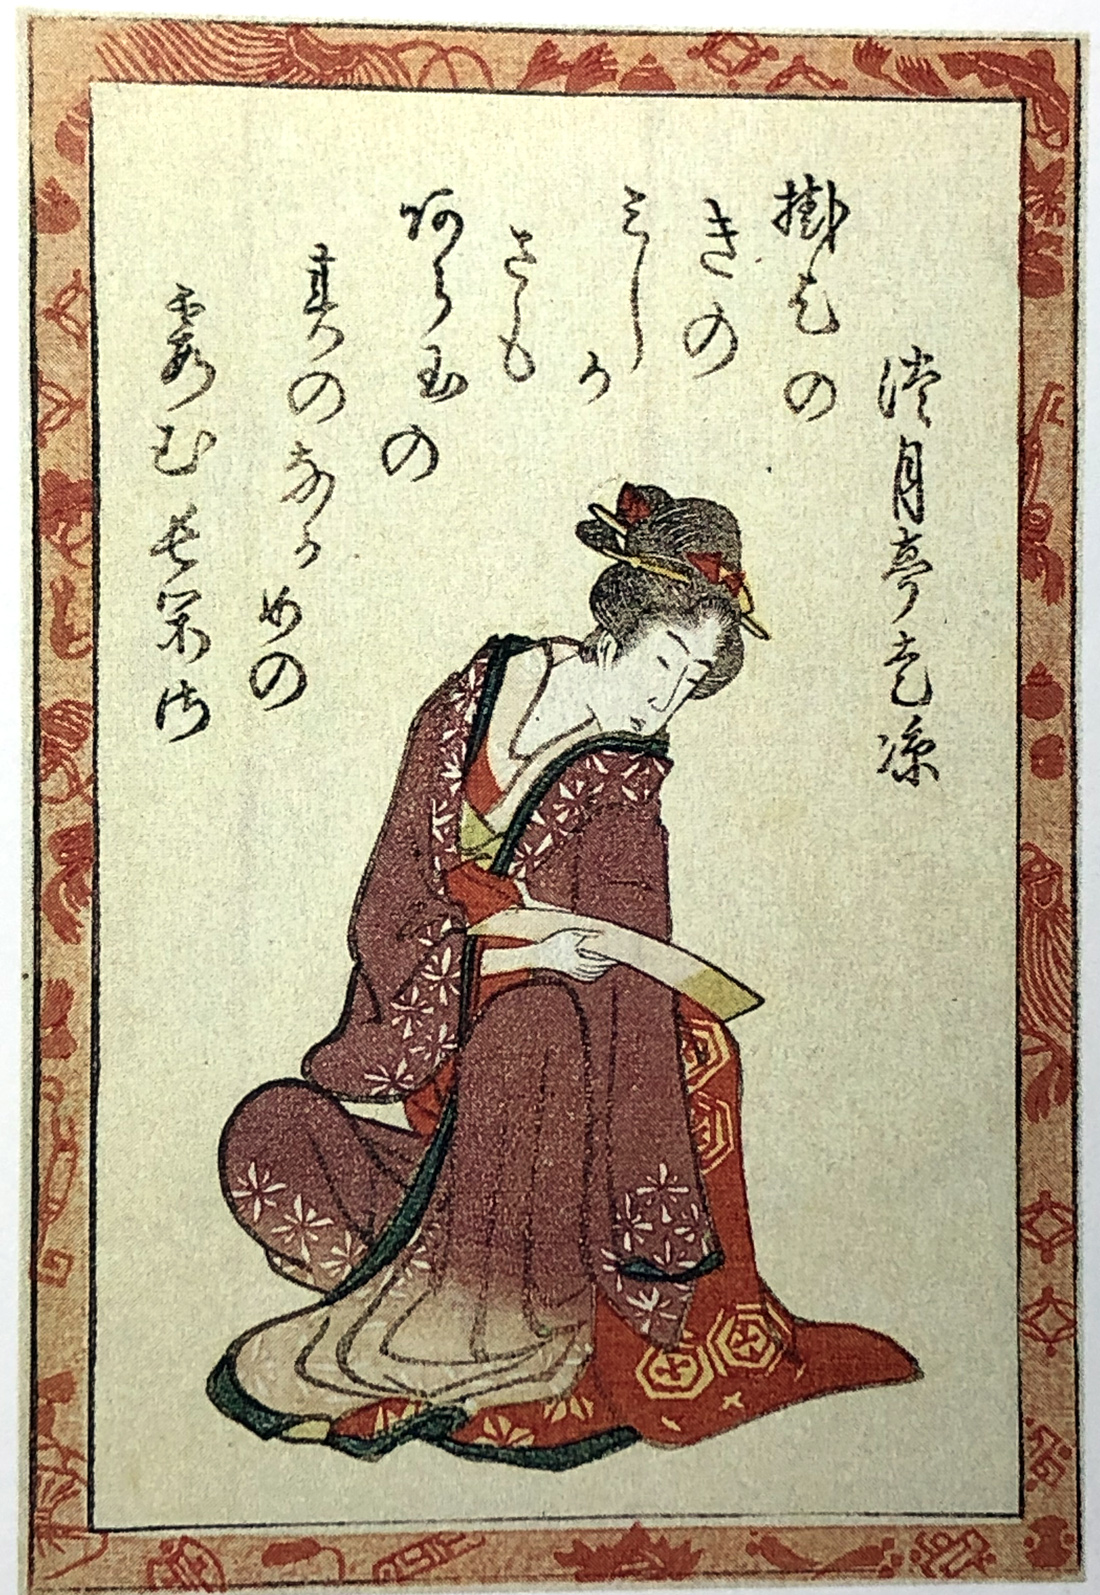 Hokusai - Poet #38 - 100 Kyoka Poets